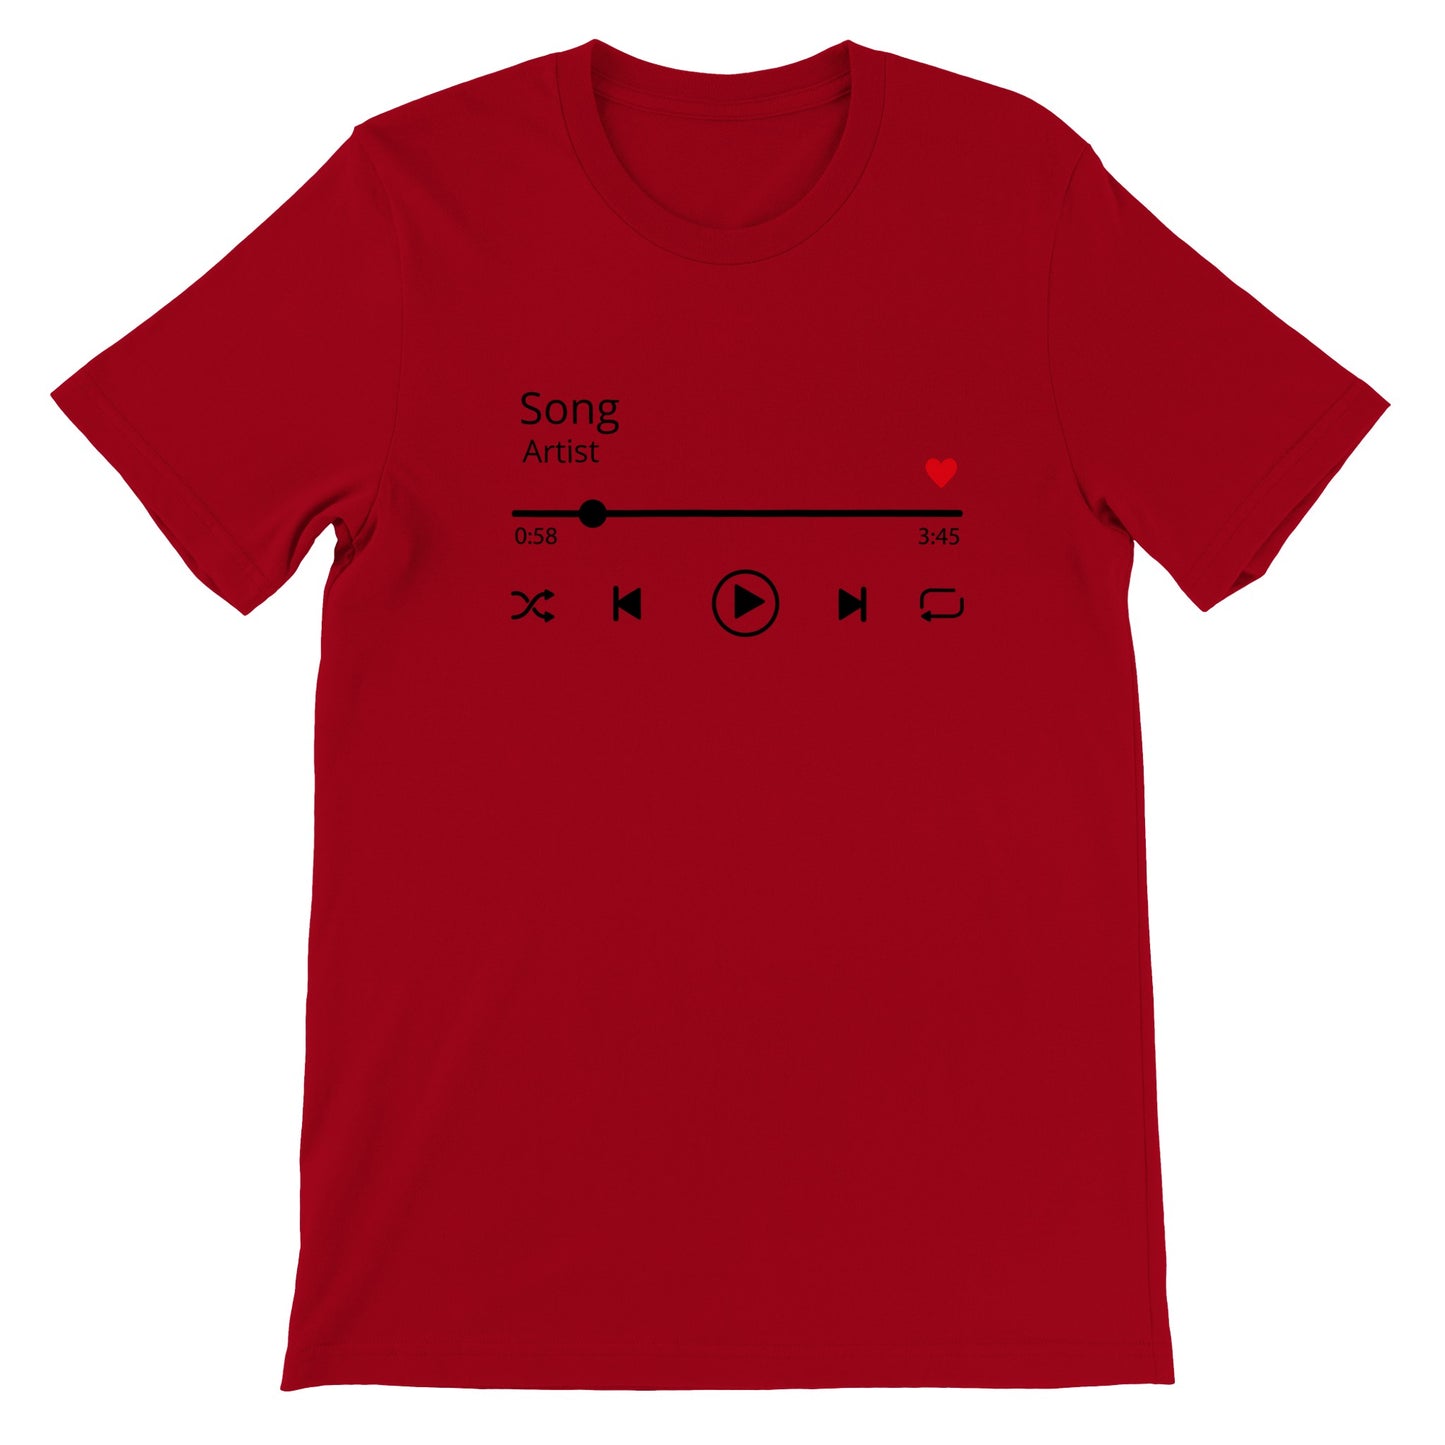 Music T-shirt - Your Favorite Music Song and Artist Player T-shirt - Premium Unisex T-shirt 